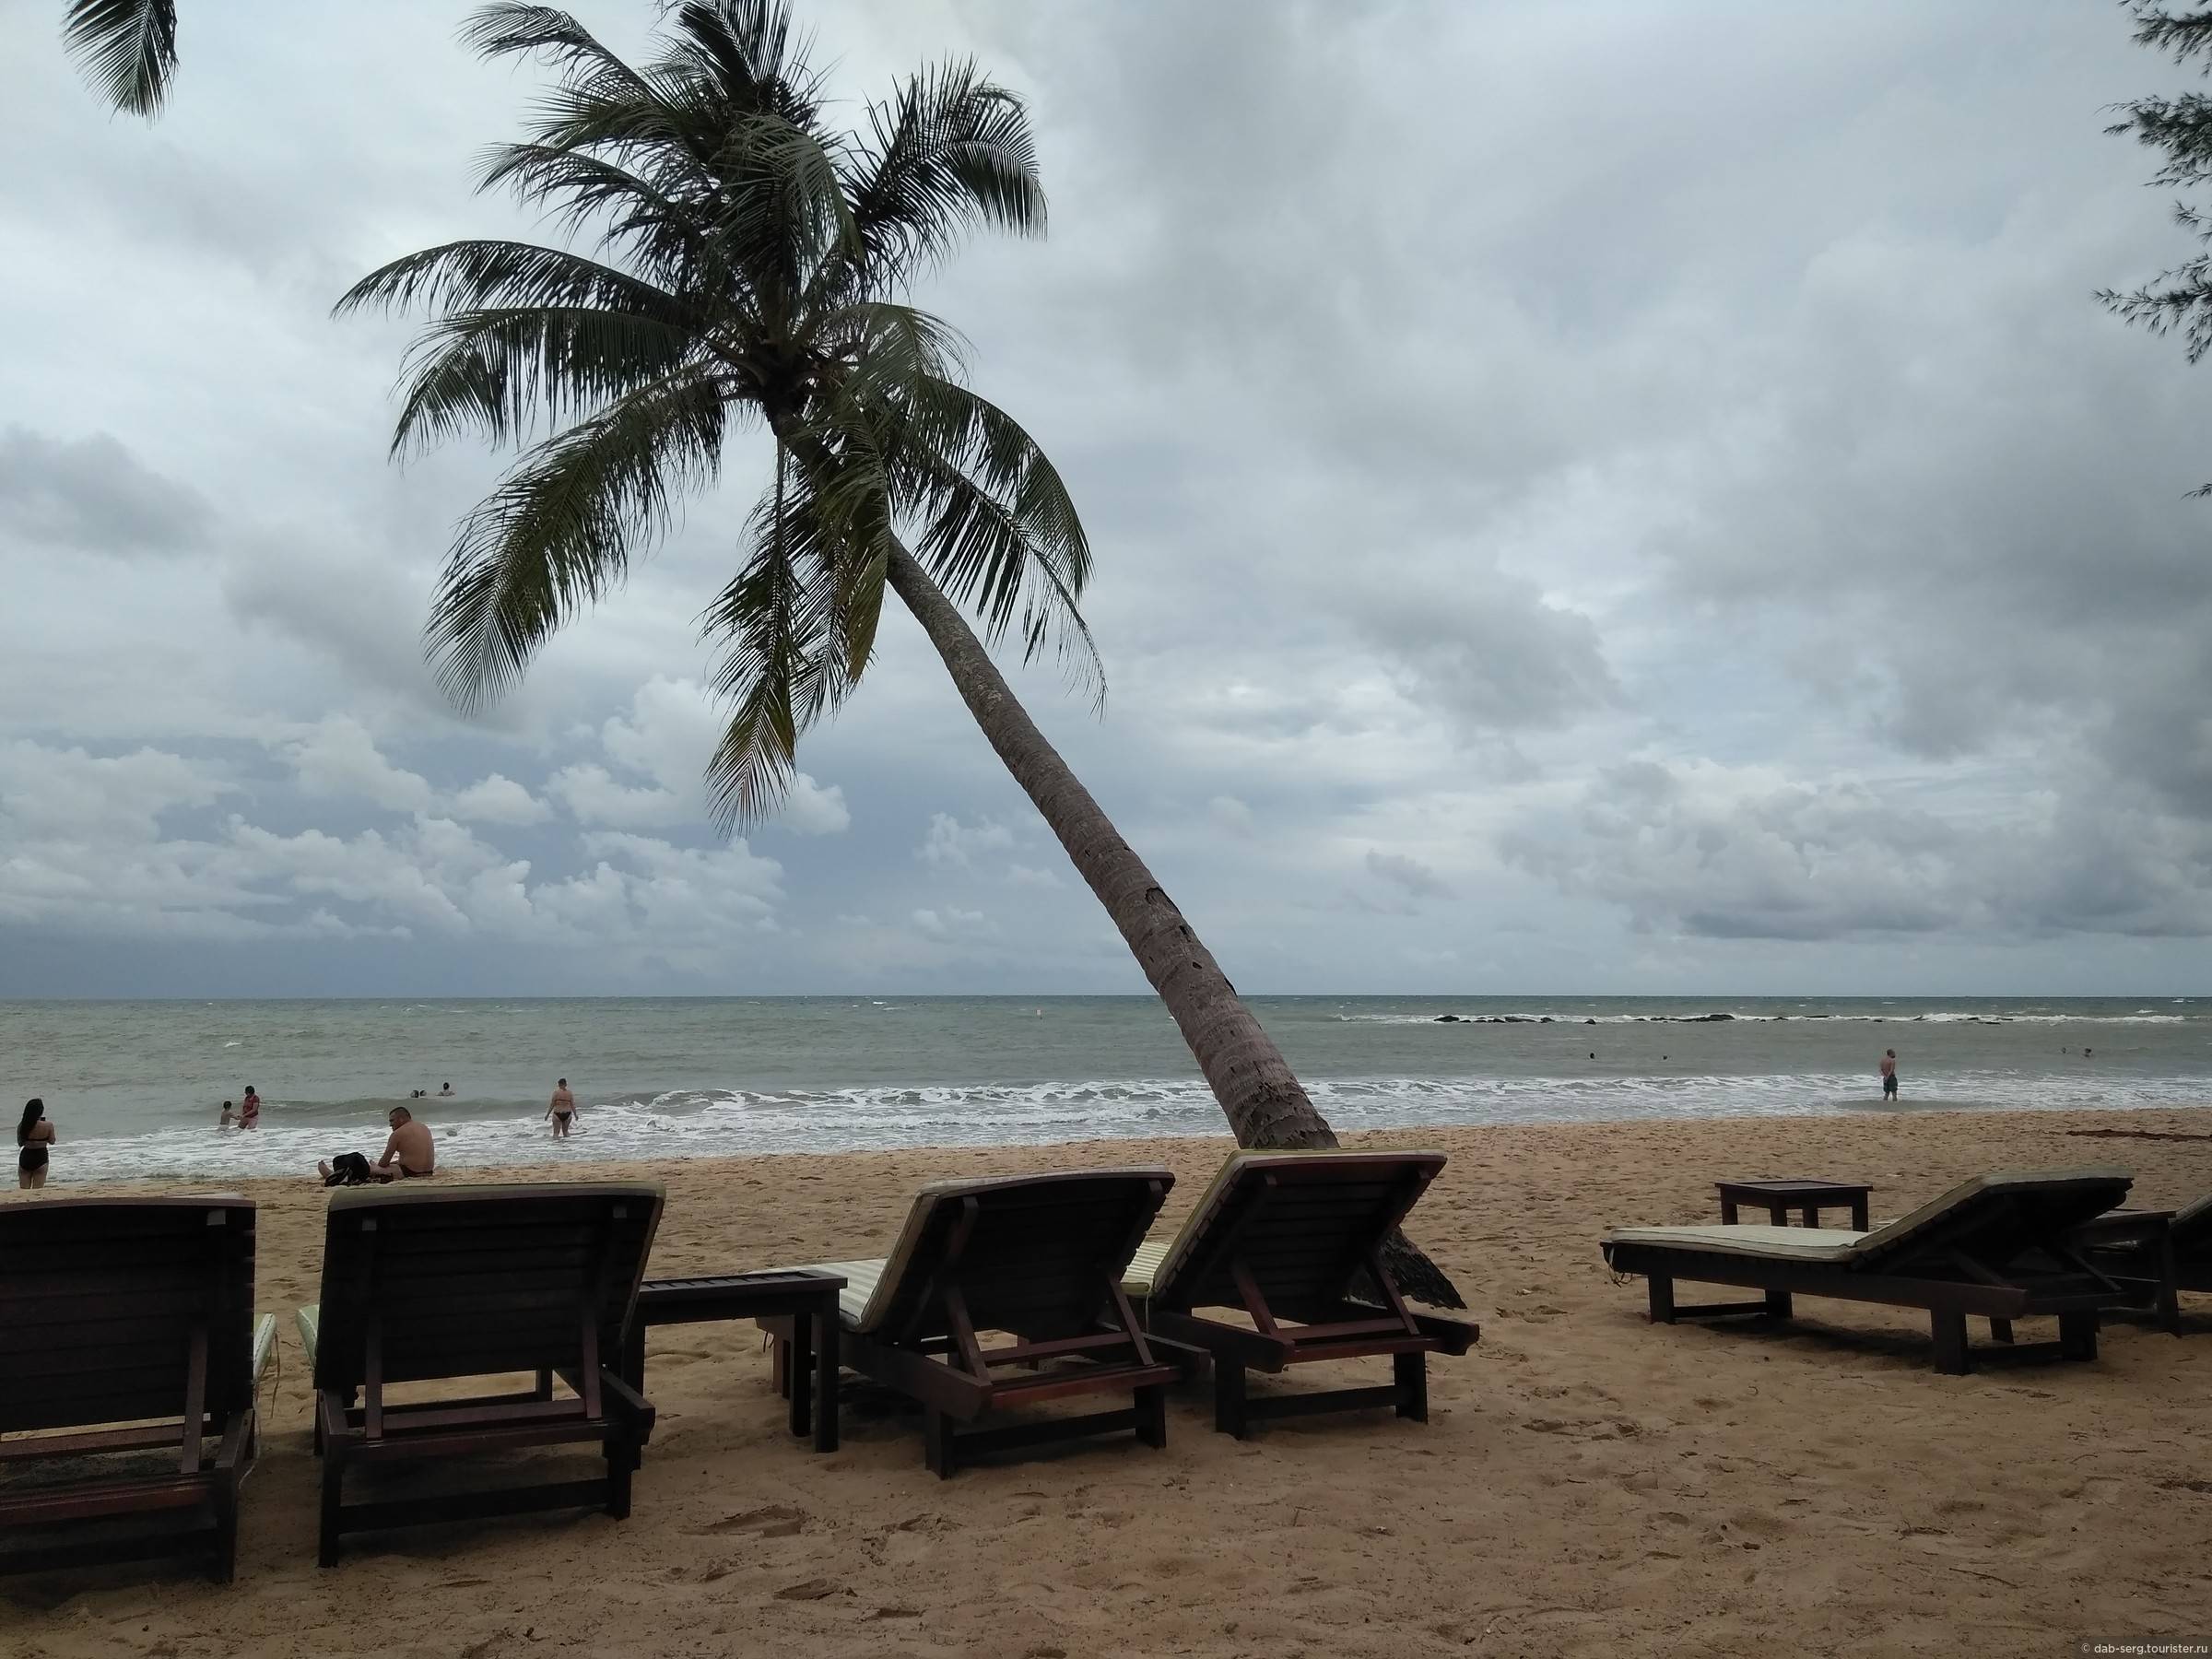 «вьетнам. контраст о.фукуок и г.нячанг» thanh kieu beach resort, архипелаг фукуок, вьетнам. отзыв туриста